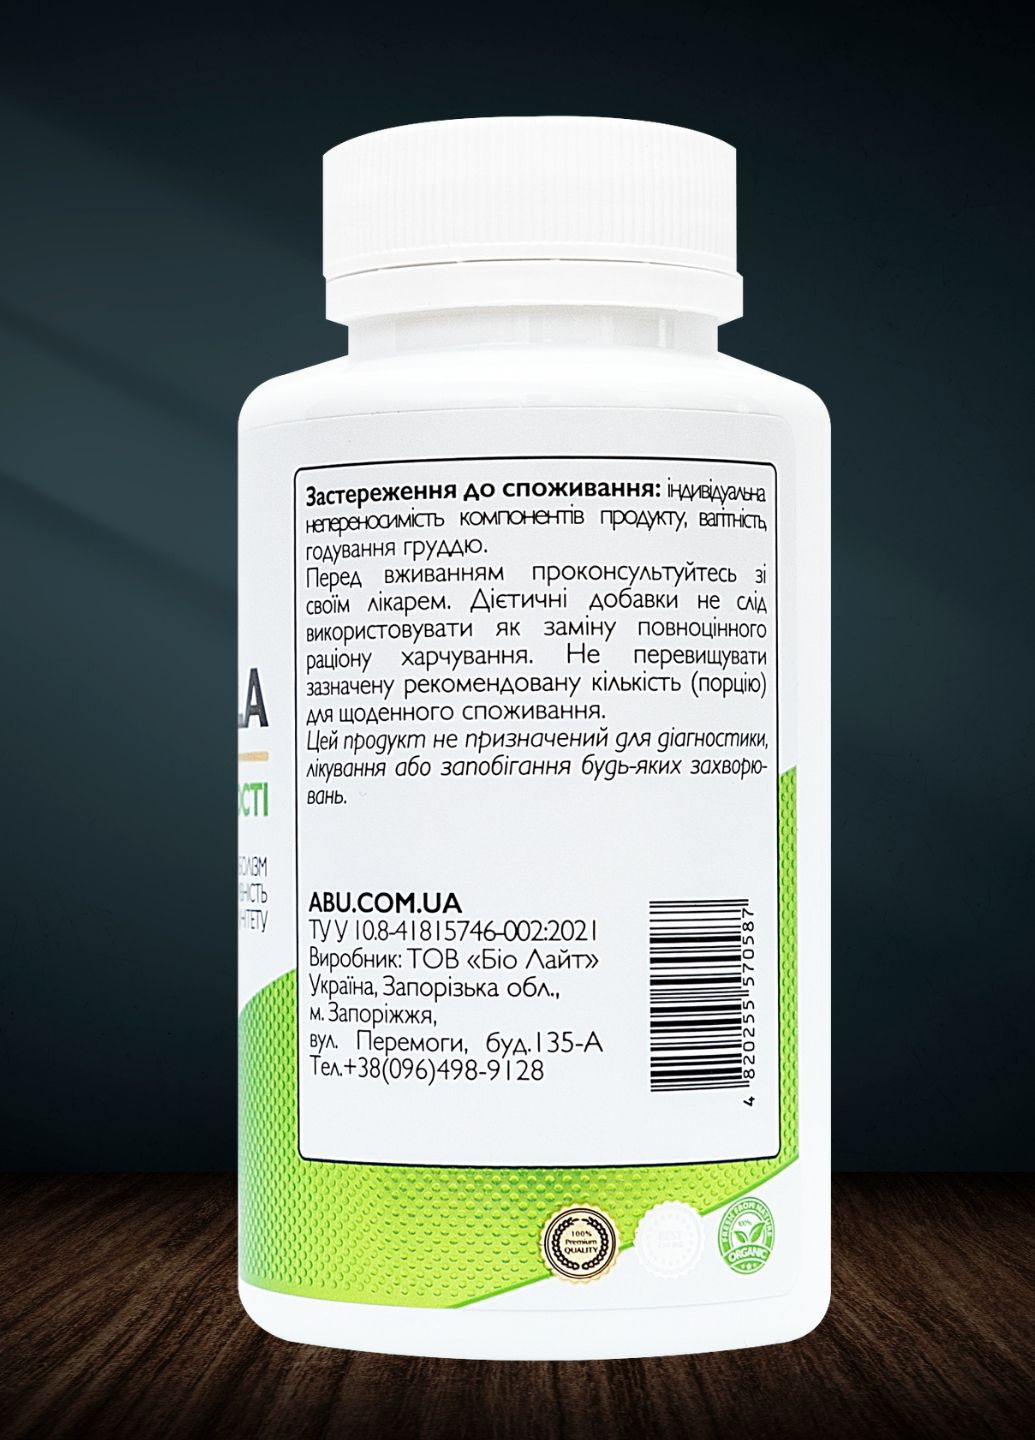 Хлорелла Chlorella 150 таблеток | Ускорение метаболических процессов ABU (All Be Ukraine) (278635481)